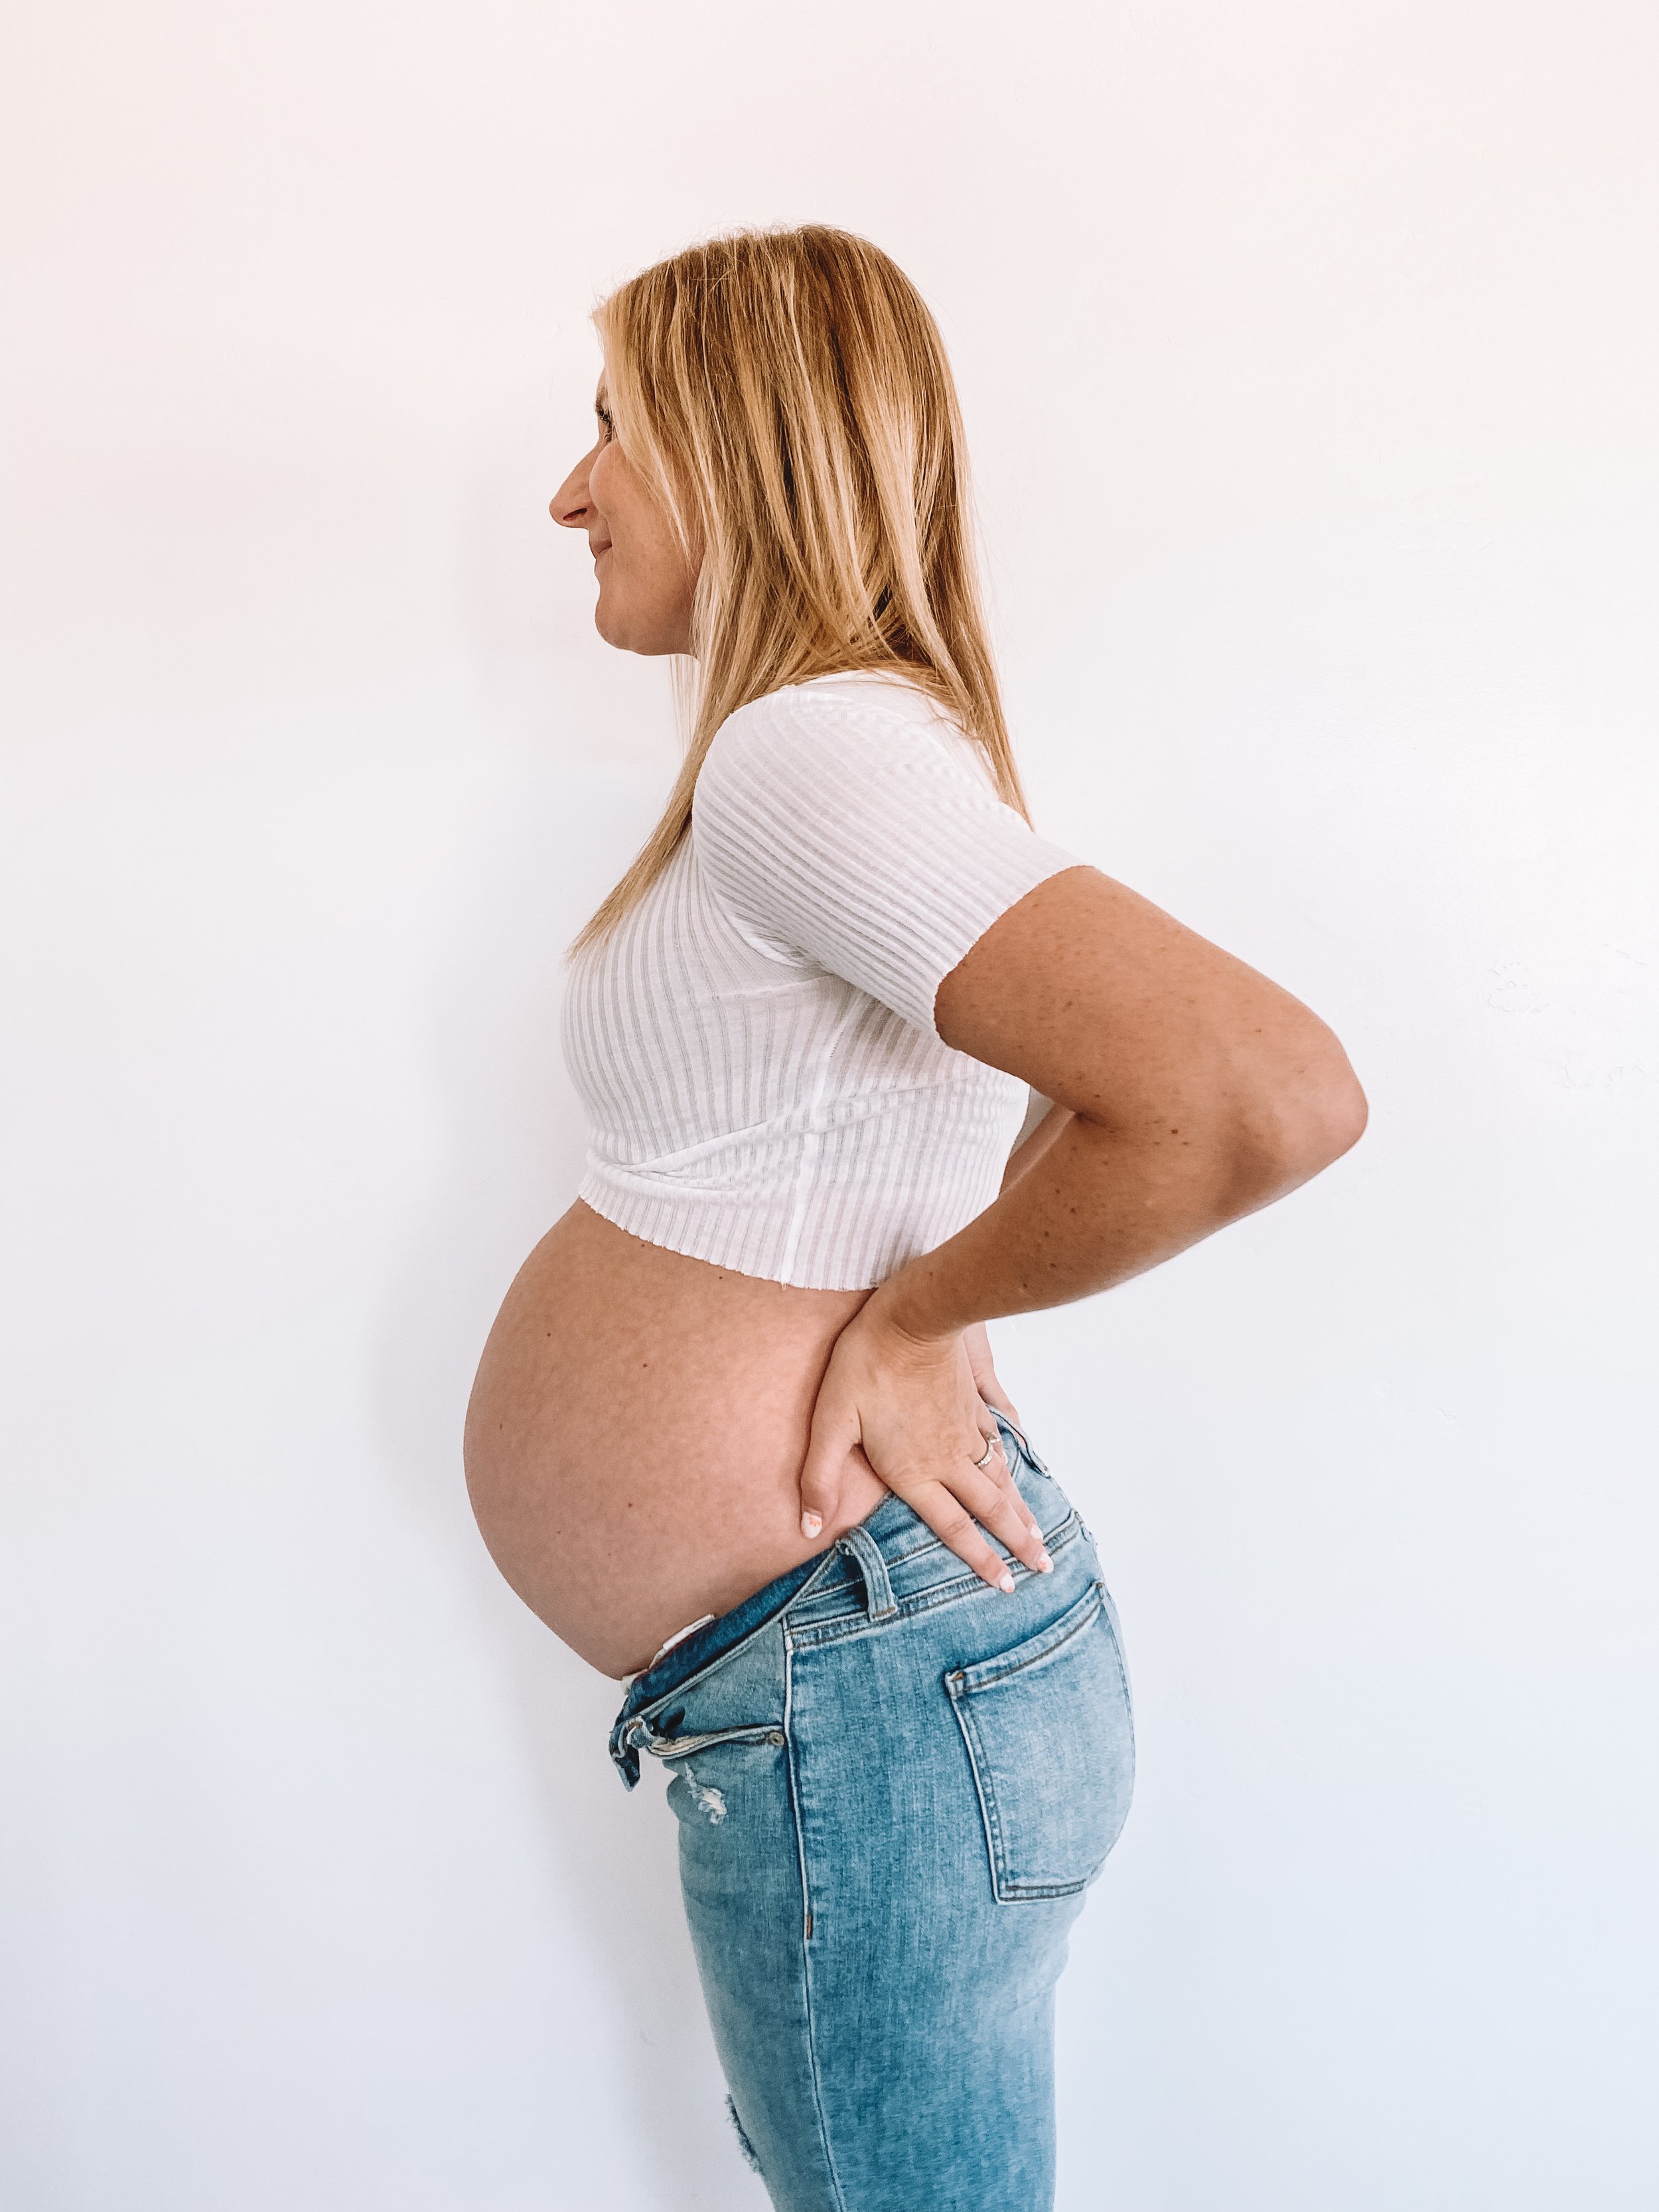 31 Weeks Pregnant  Baby Bump